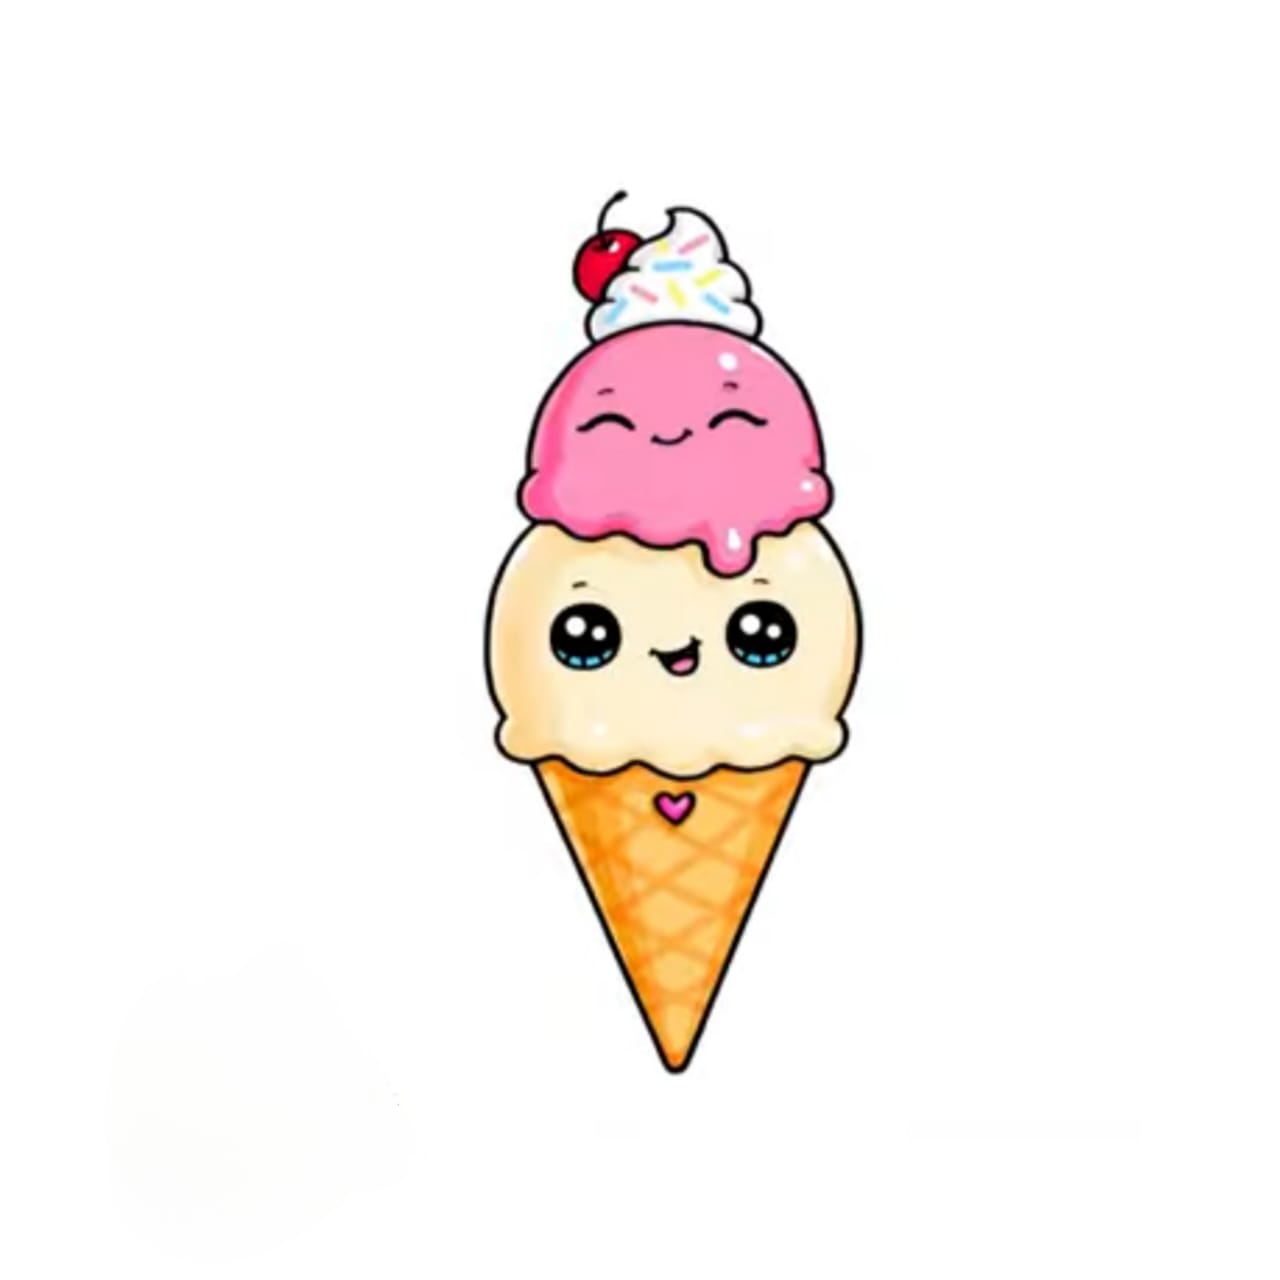 Beautiful Ice Cream Cone Drawings in 5 Minutes - Bloggchain